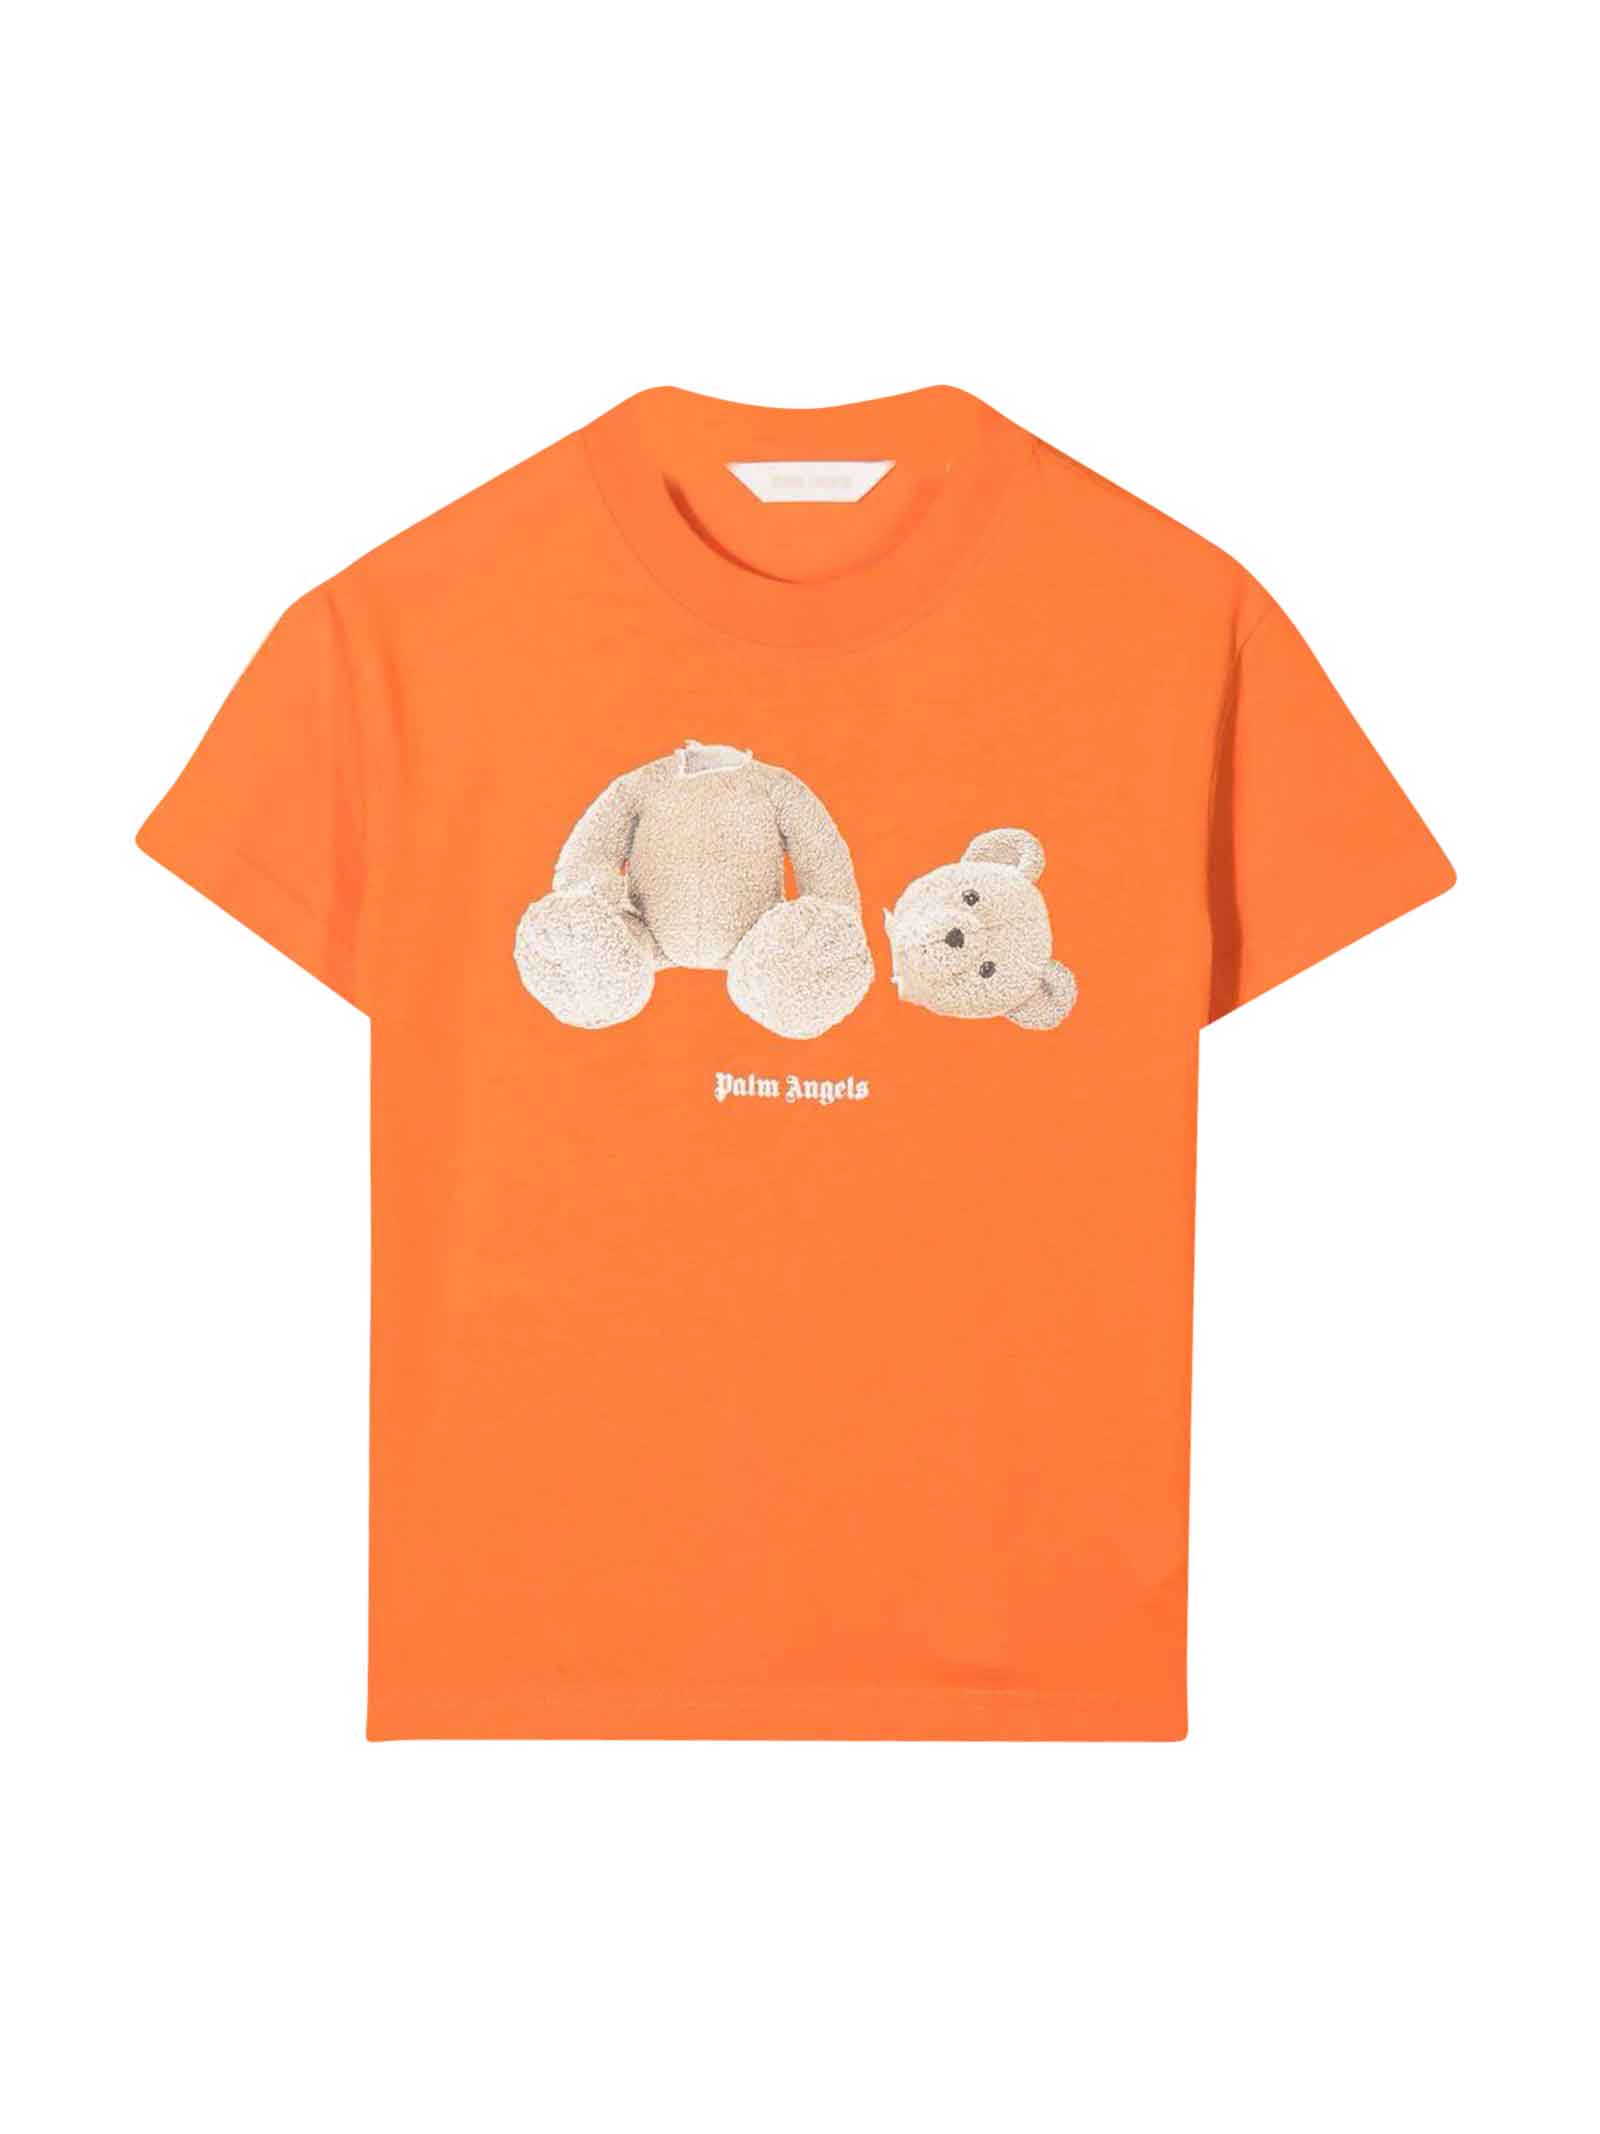 Palm Angels Orange T-shirt Boy.